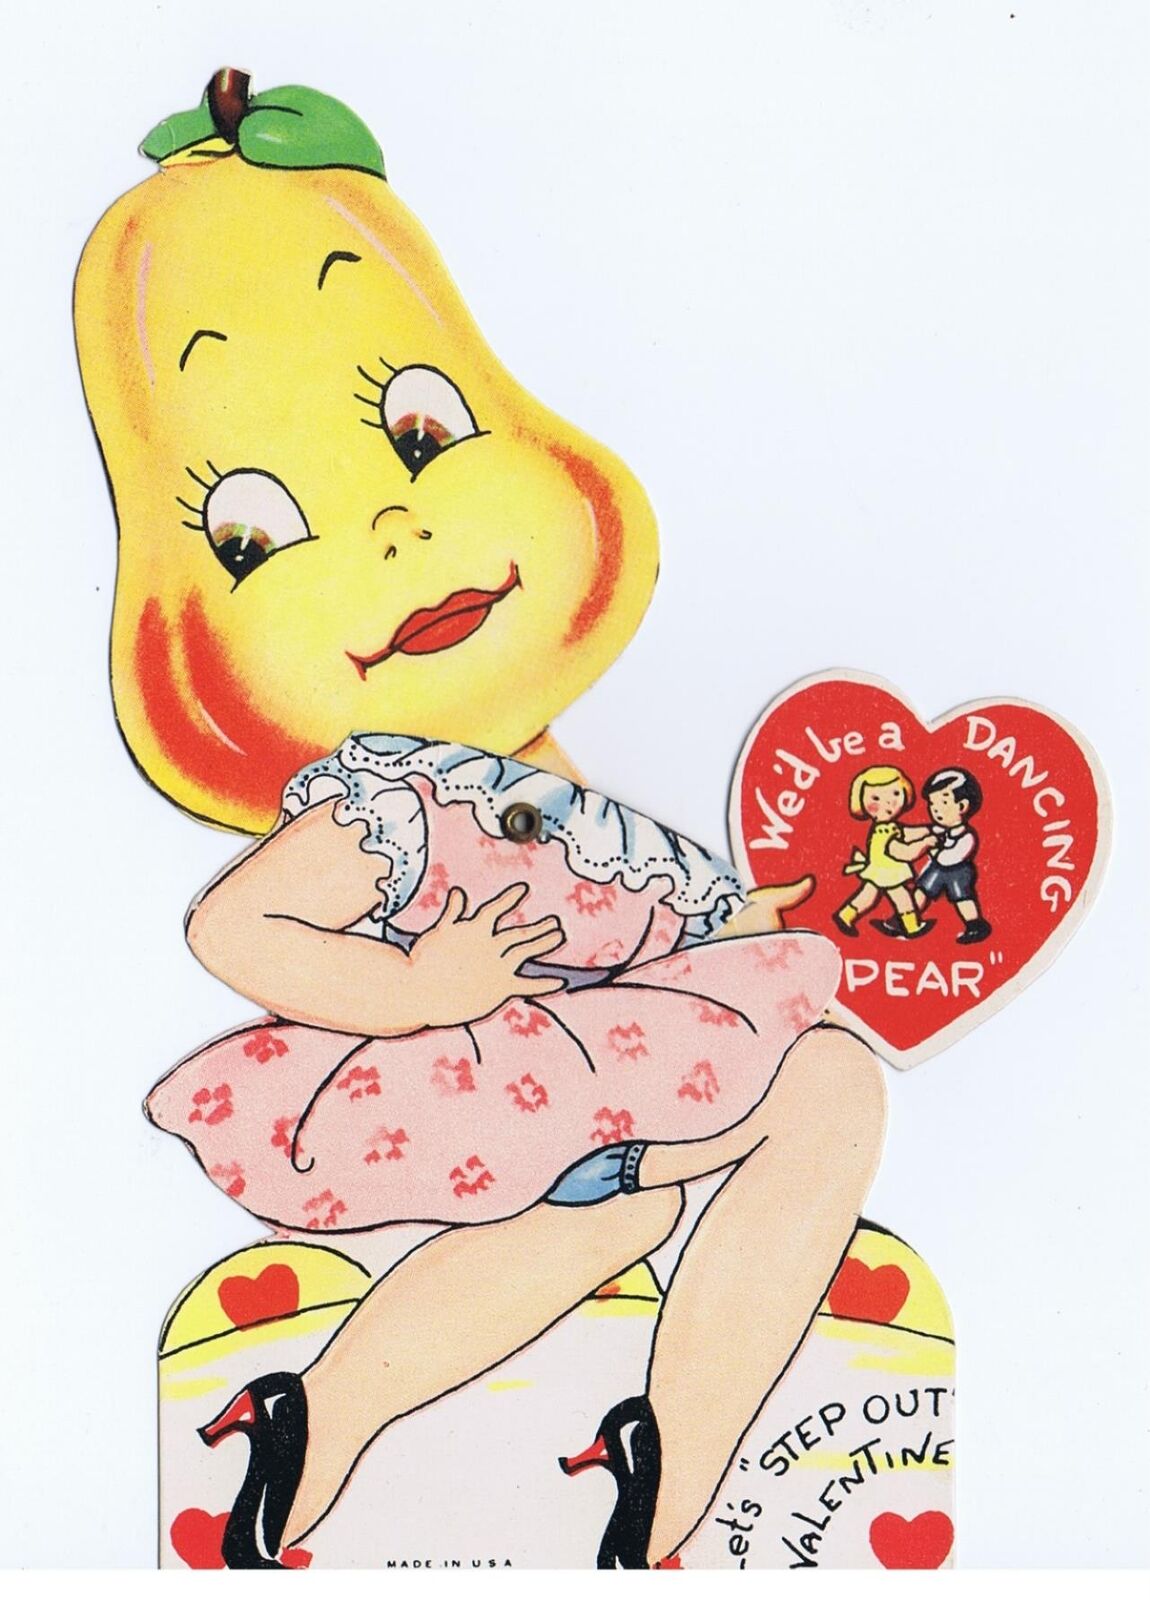 Vintage Valentine Card Die-cut Mechanical Anthropomorphic Pear Dancing Lady